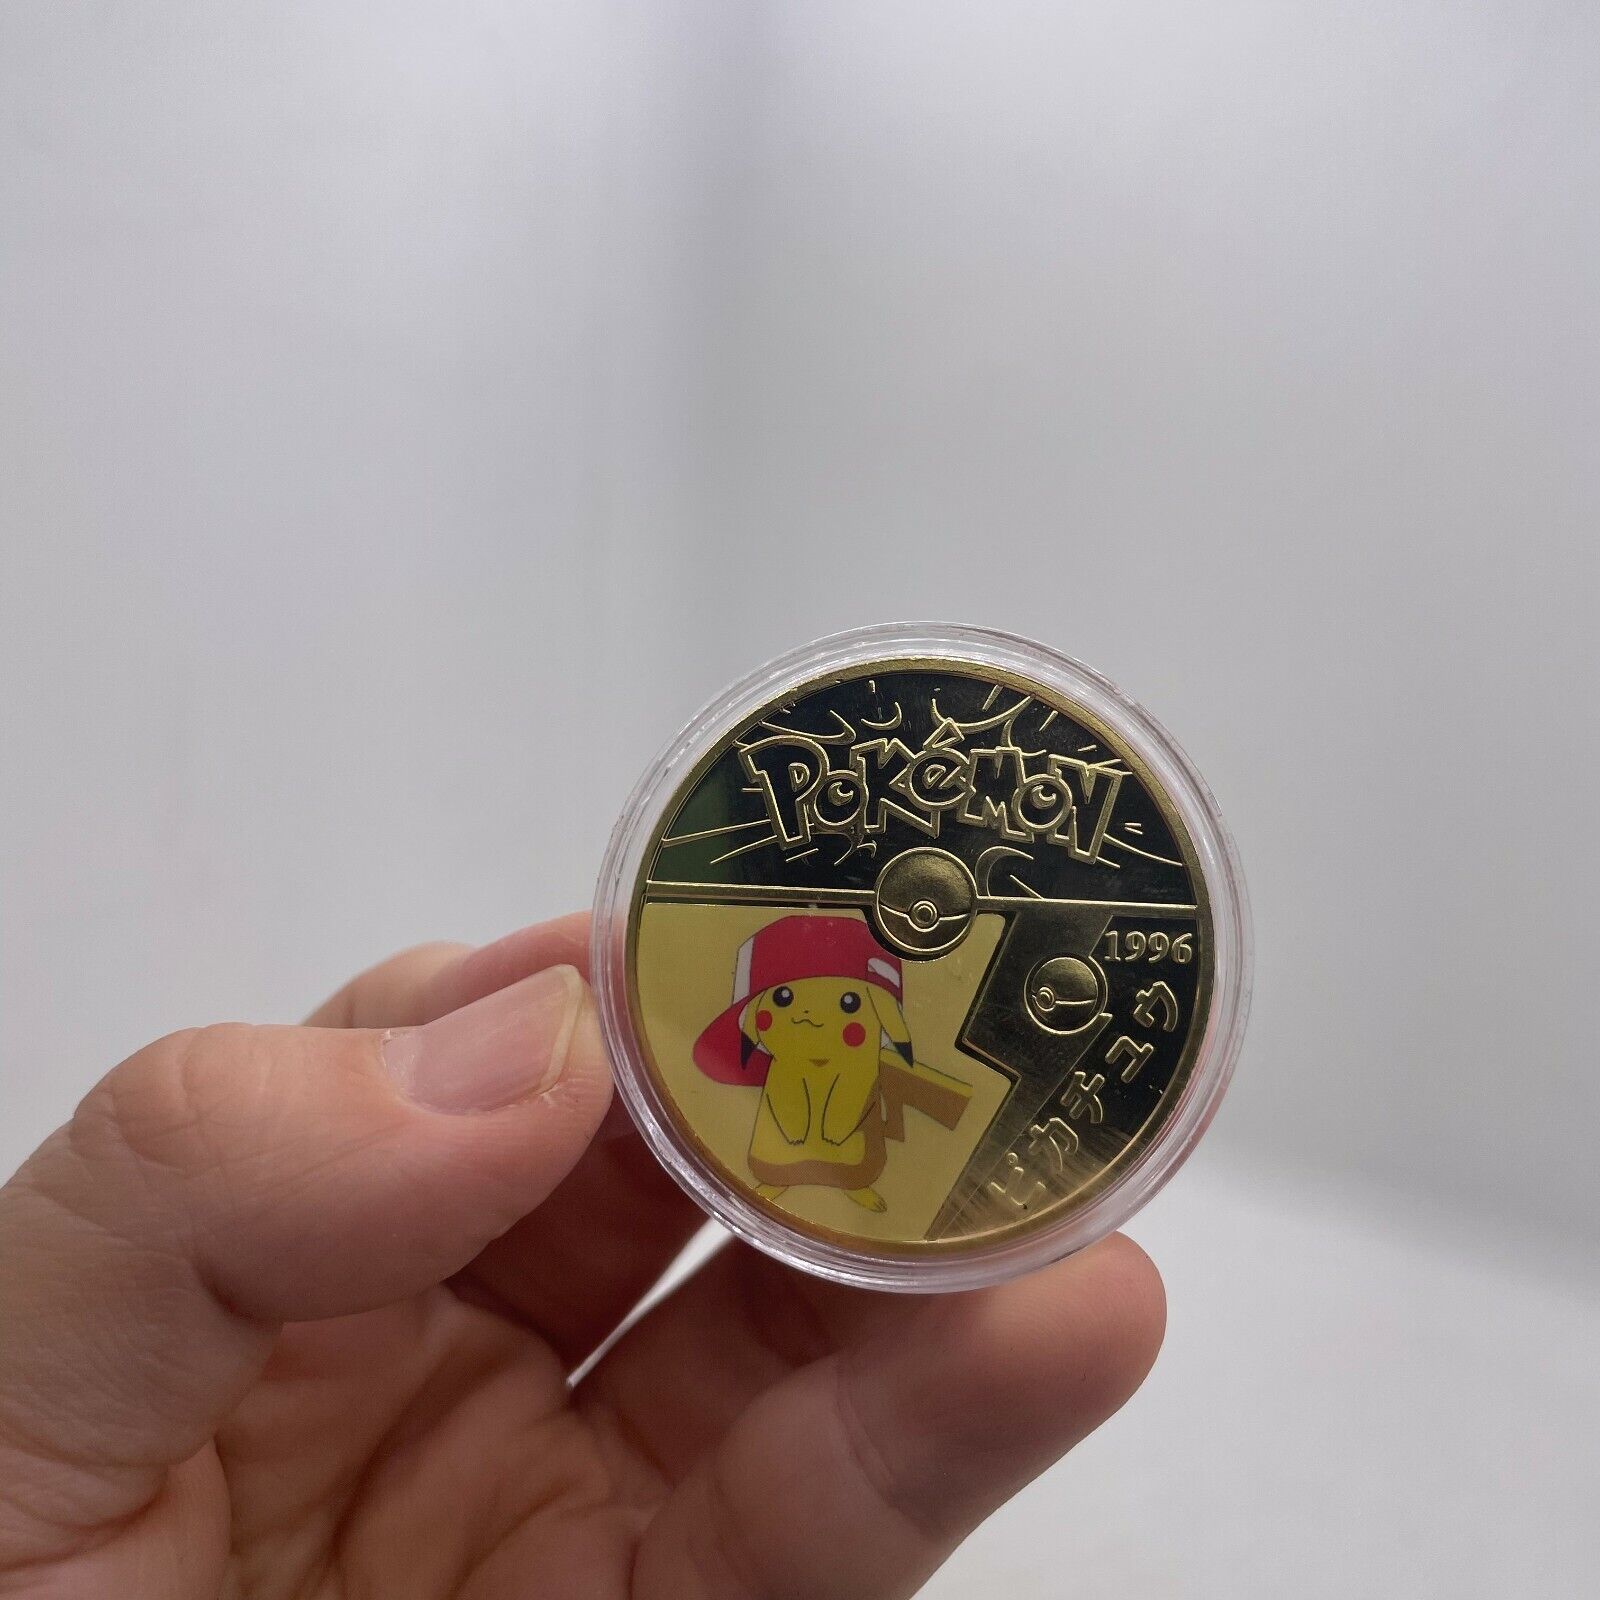 10pcs Pokemon Pikachu Coin Japan Anime Gold Commemorative Coin in box Kelin - фотография #6